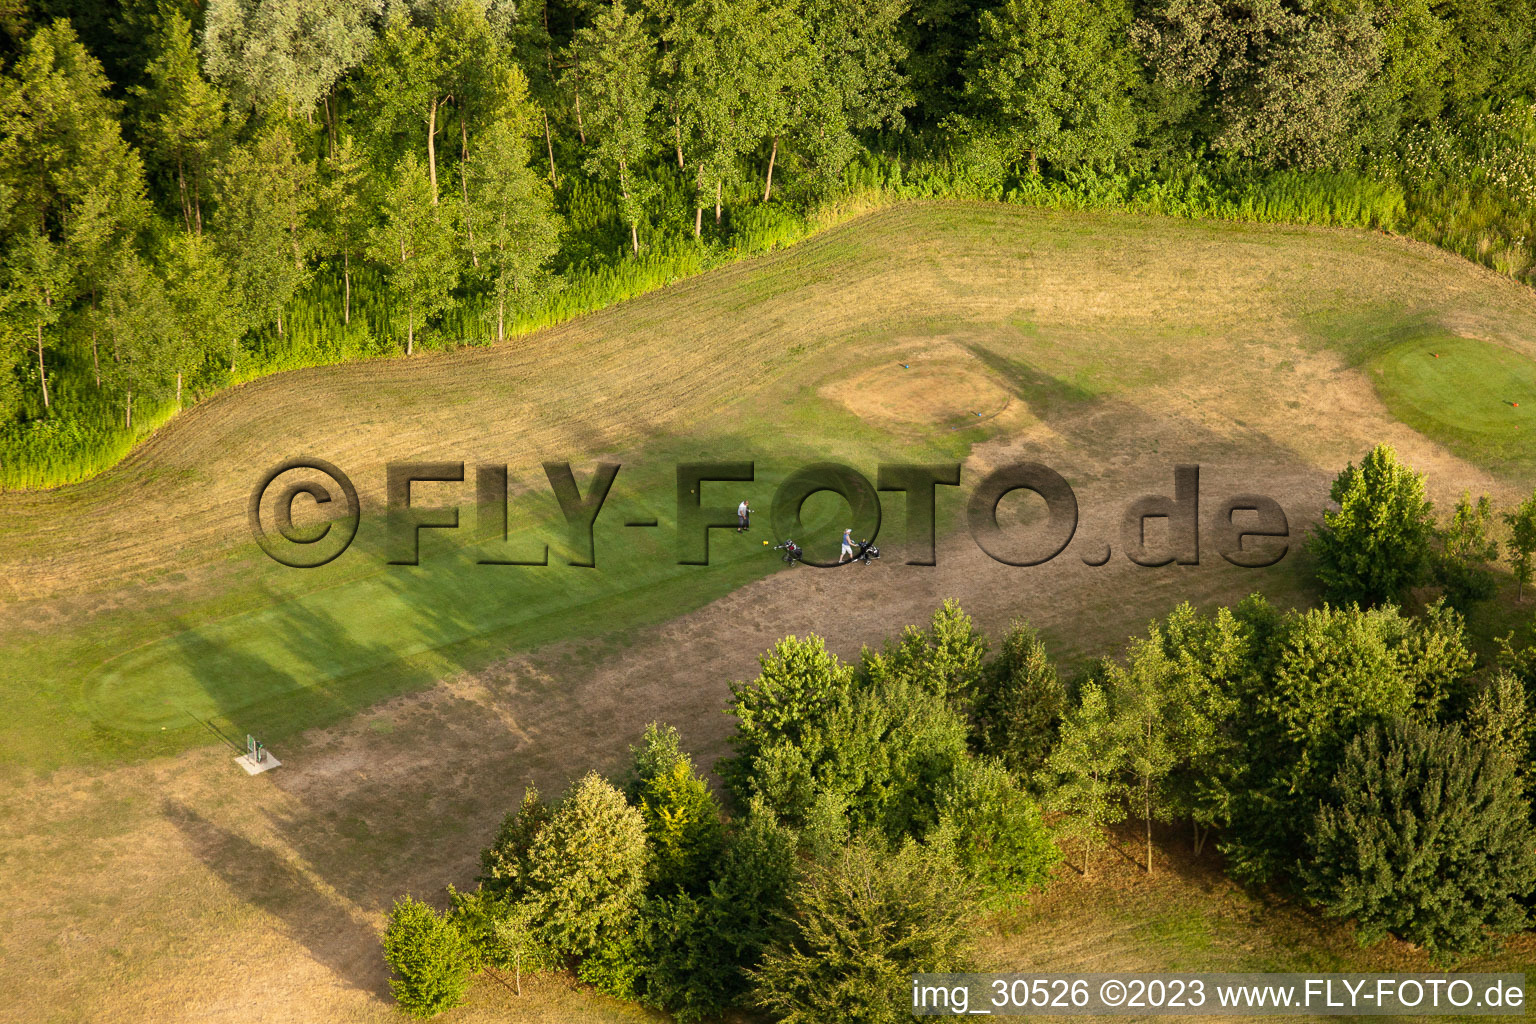 Golf club Soufflenheim Baden-Baden in Soufflenheim in the state Bas-Rhin, France seen from above